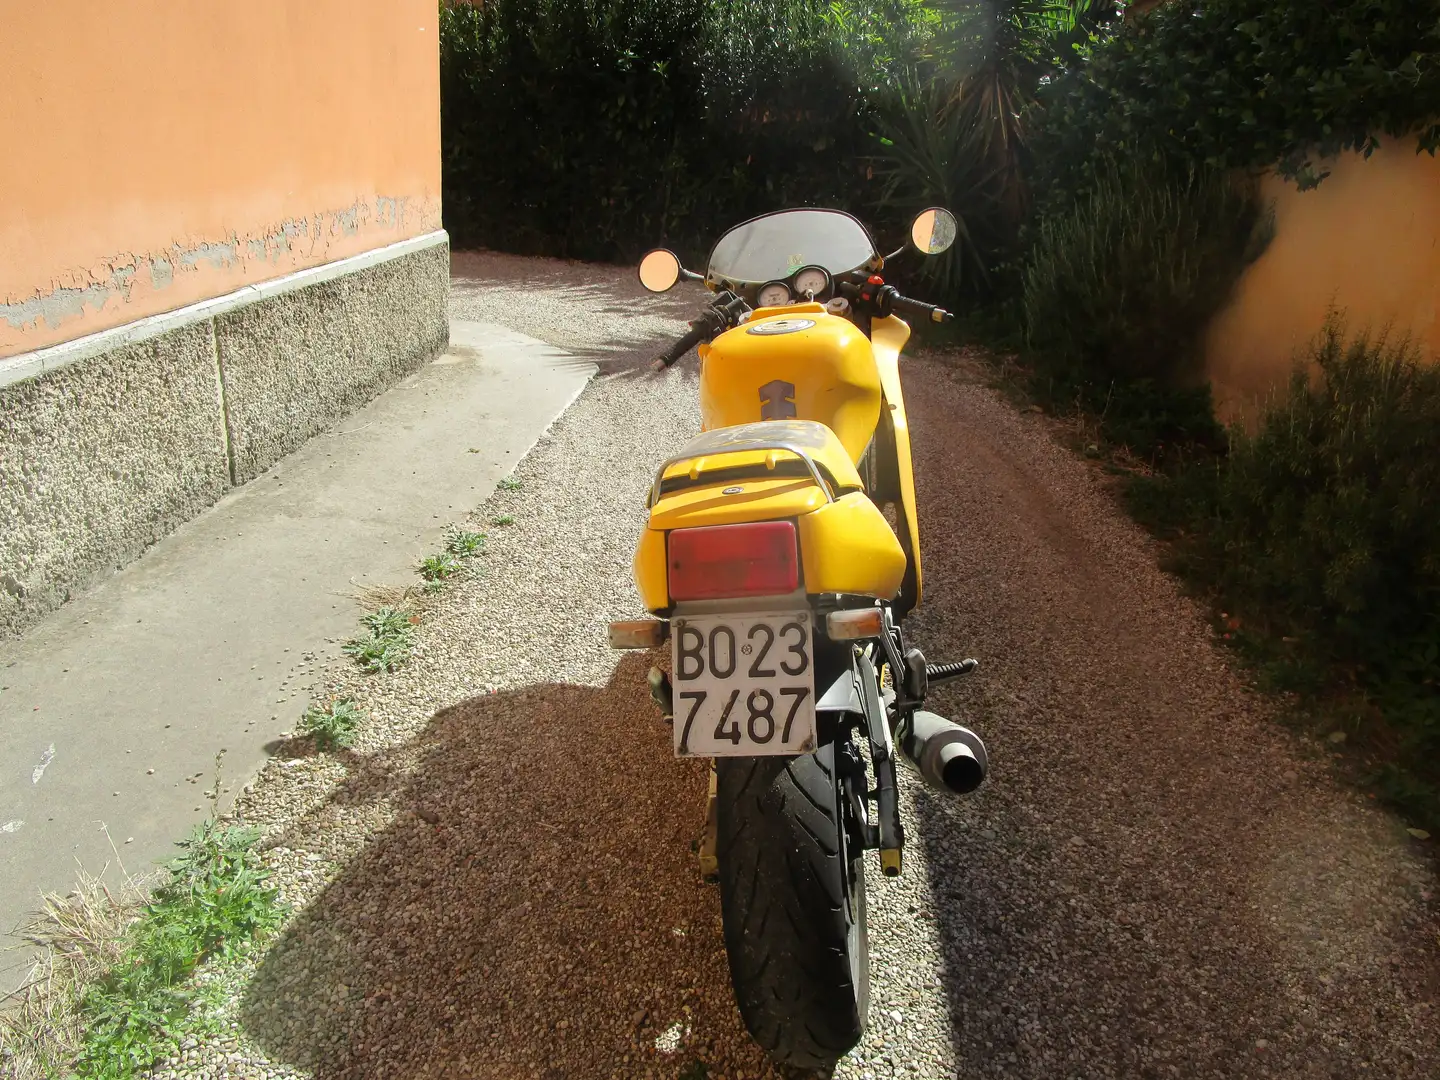 Ducati 750 SS Yellow - 2